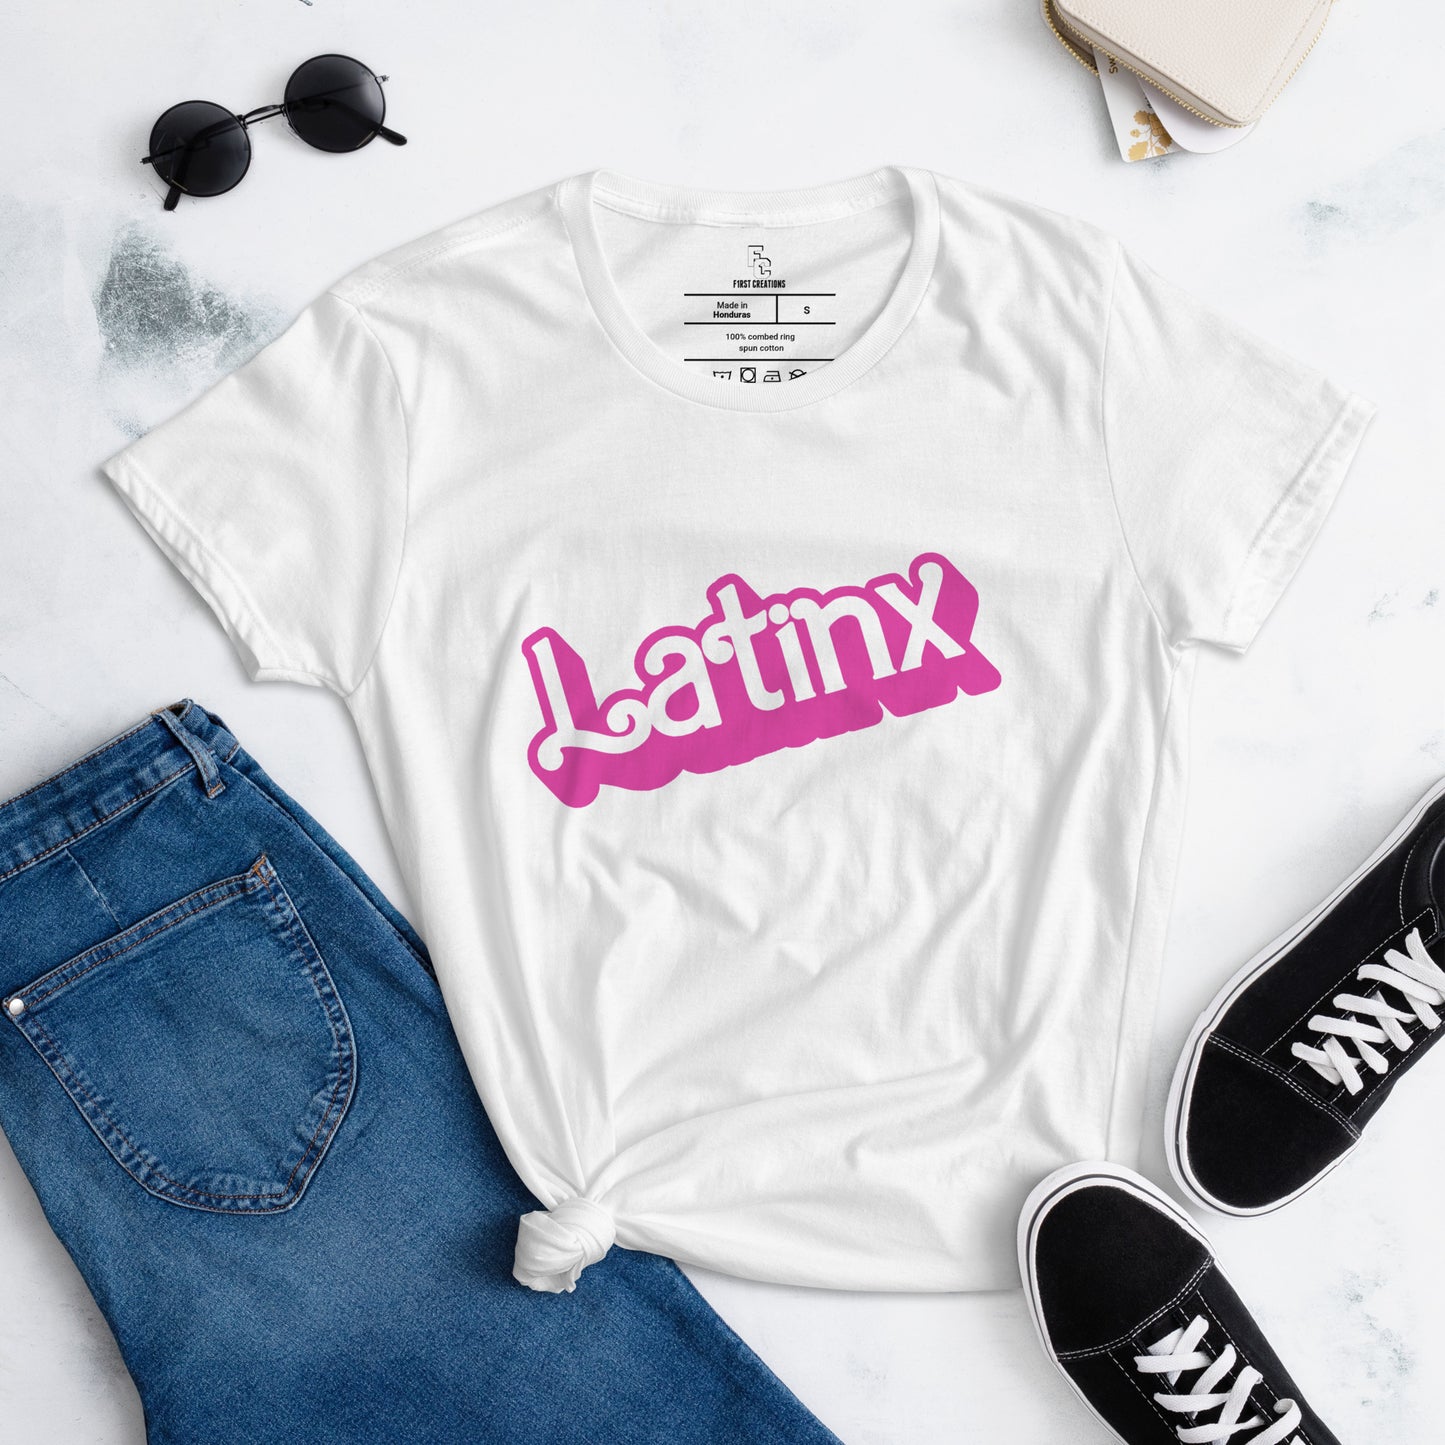 Latinx T-shirt